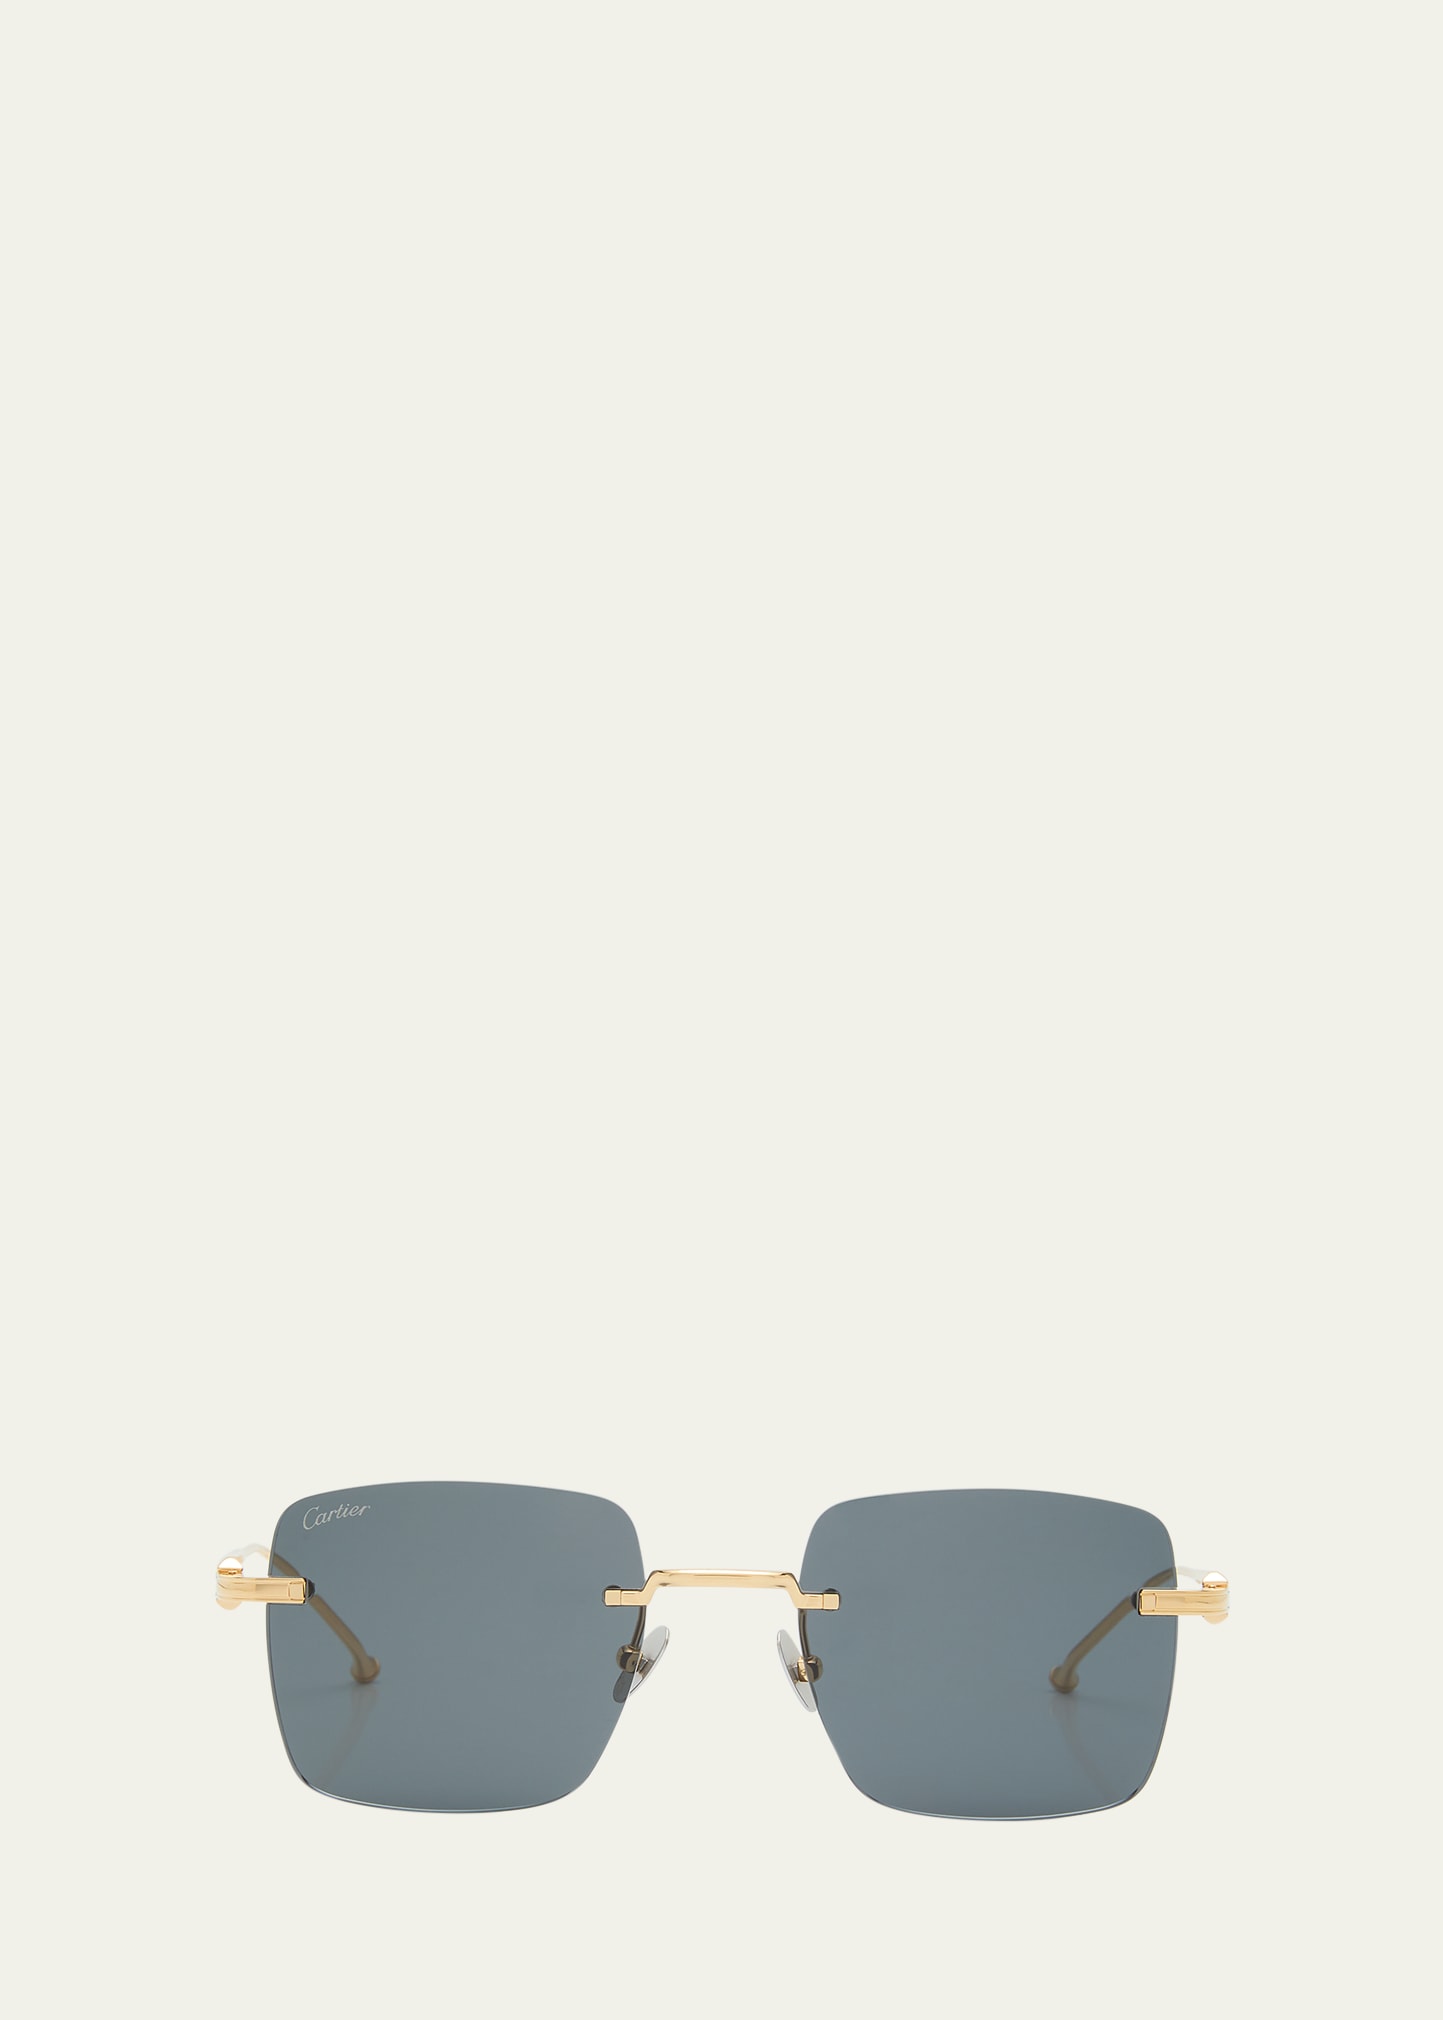 Cartier Men's Rimless Rectangle Metal Sunglasses In 002 Smooth Golden